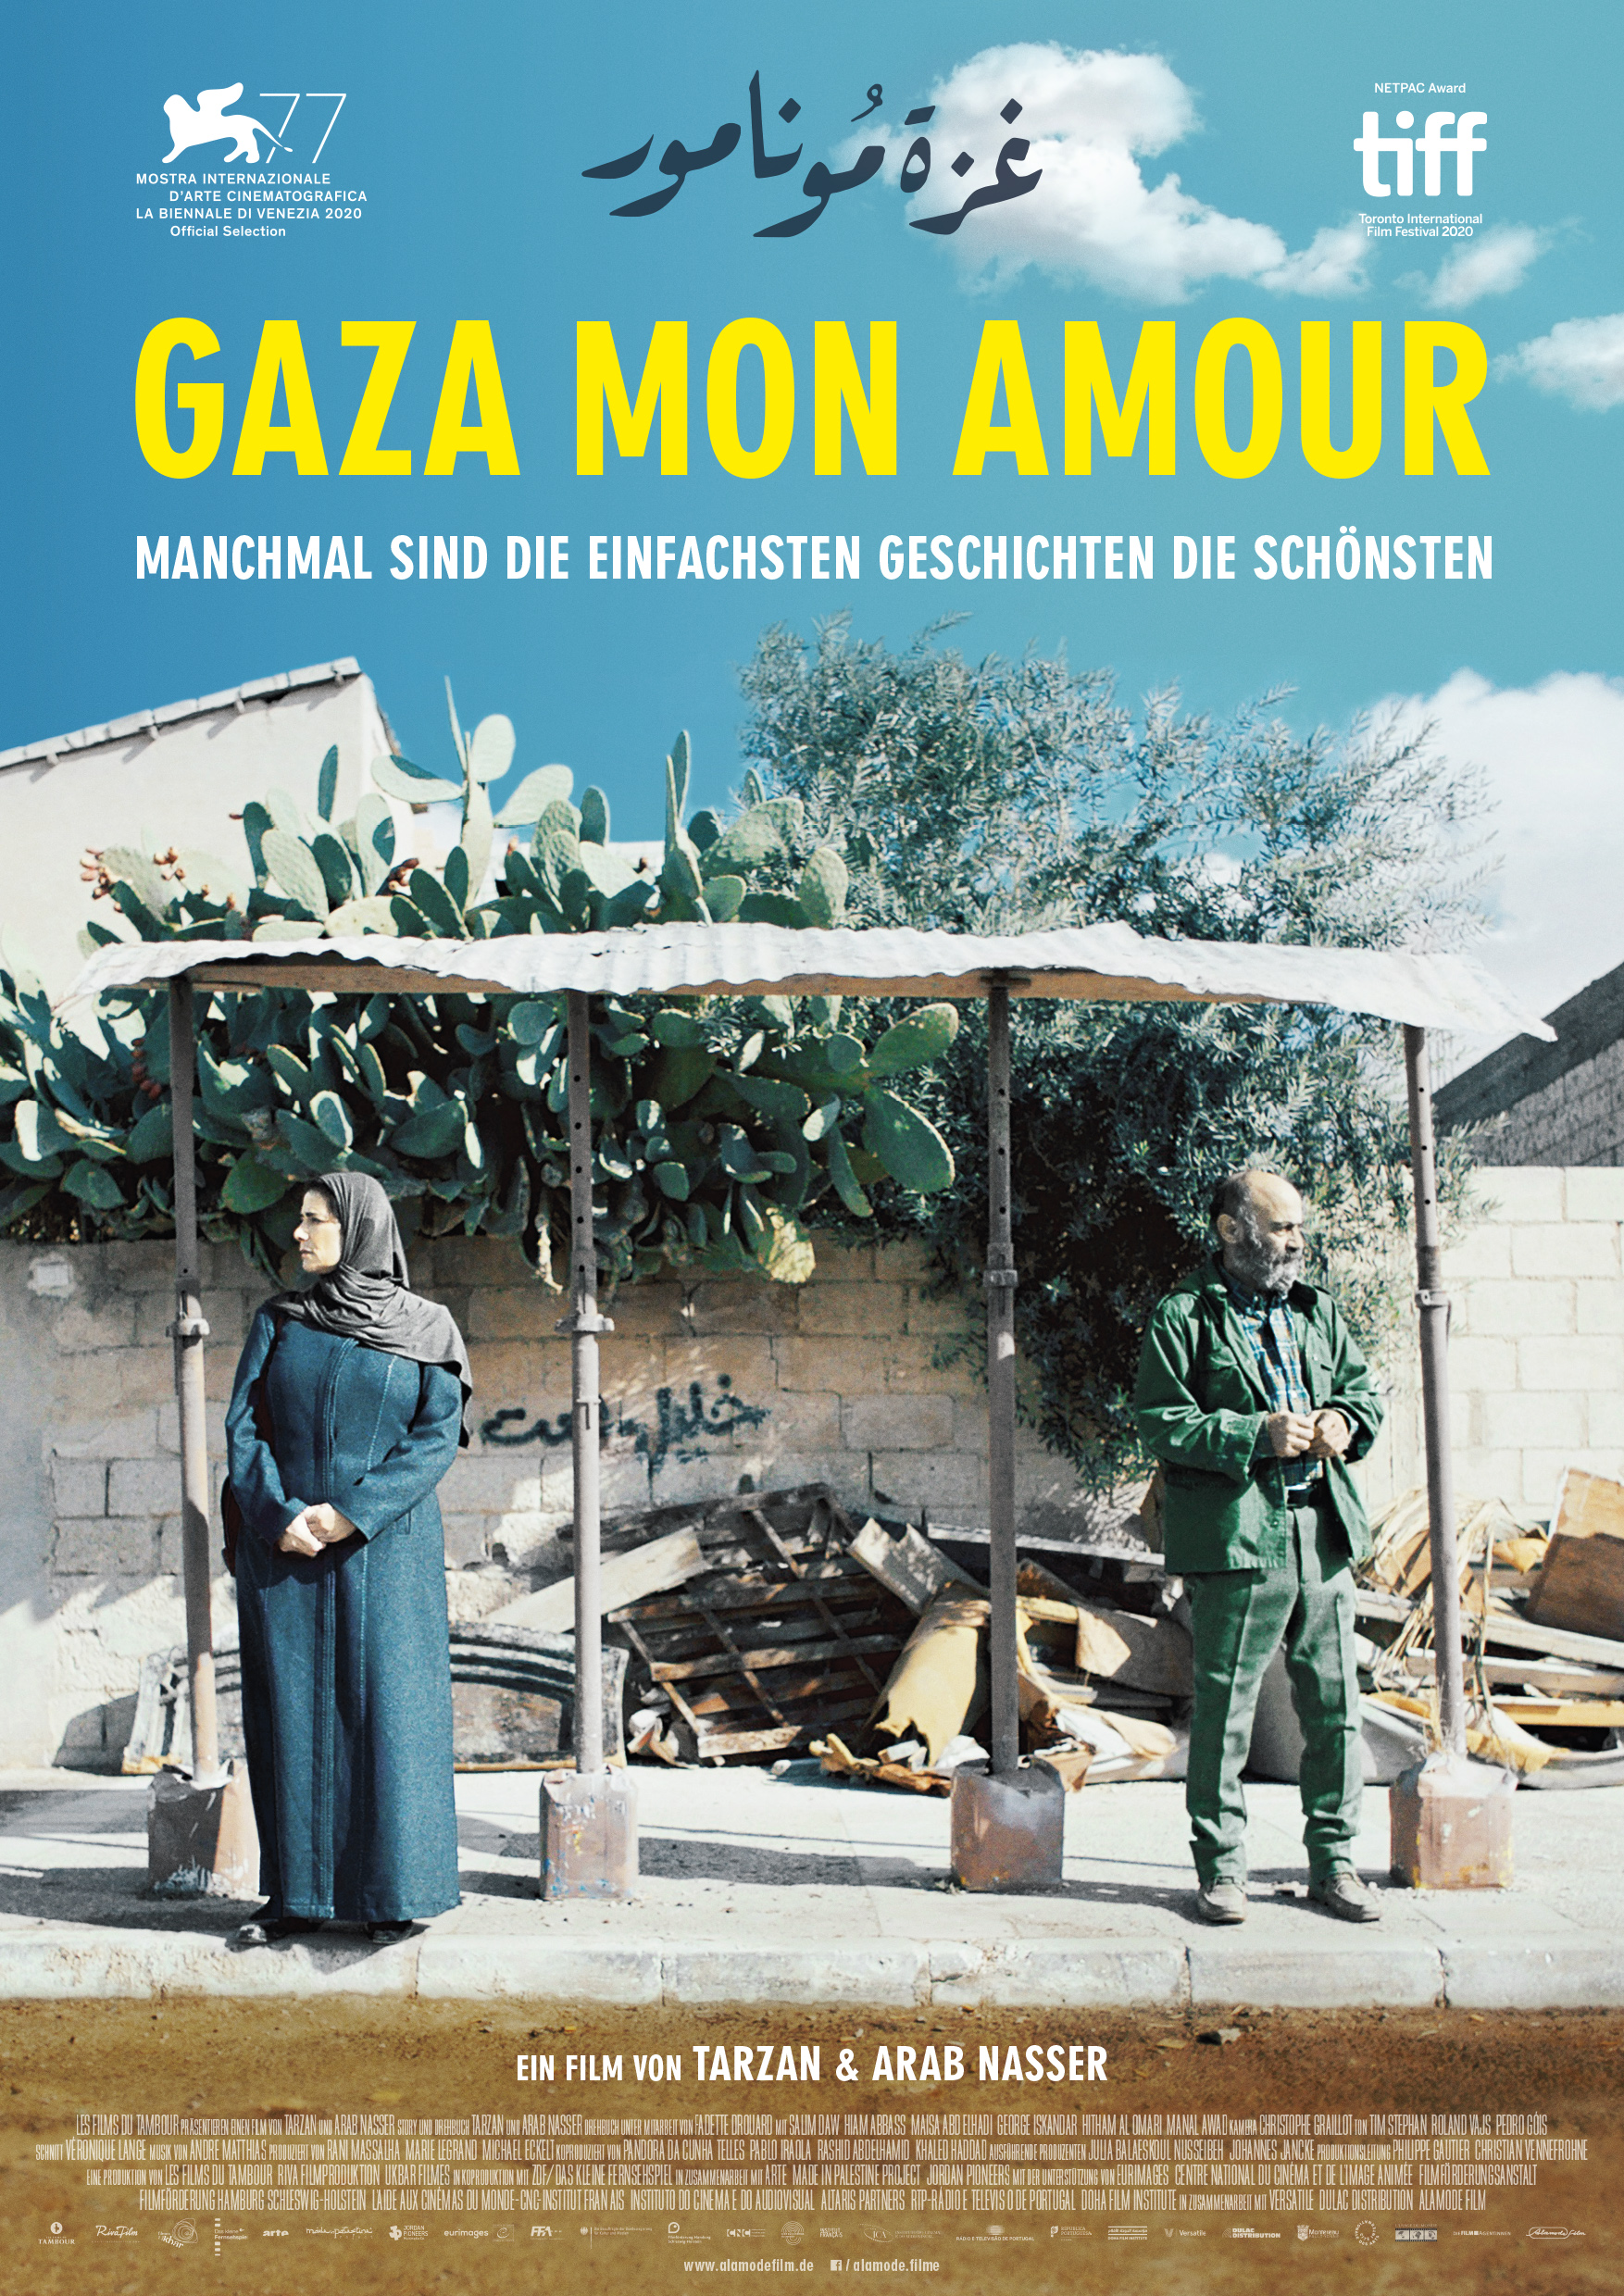 GAZA MON AMOUR | FILM KRITIK | 2021